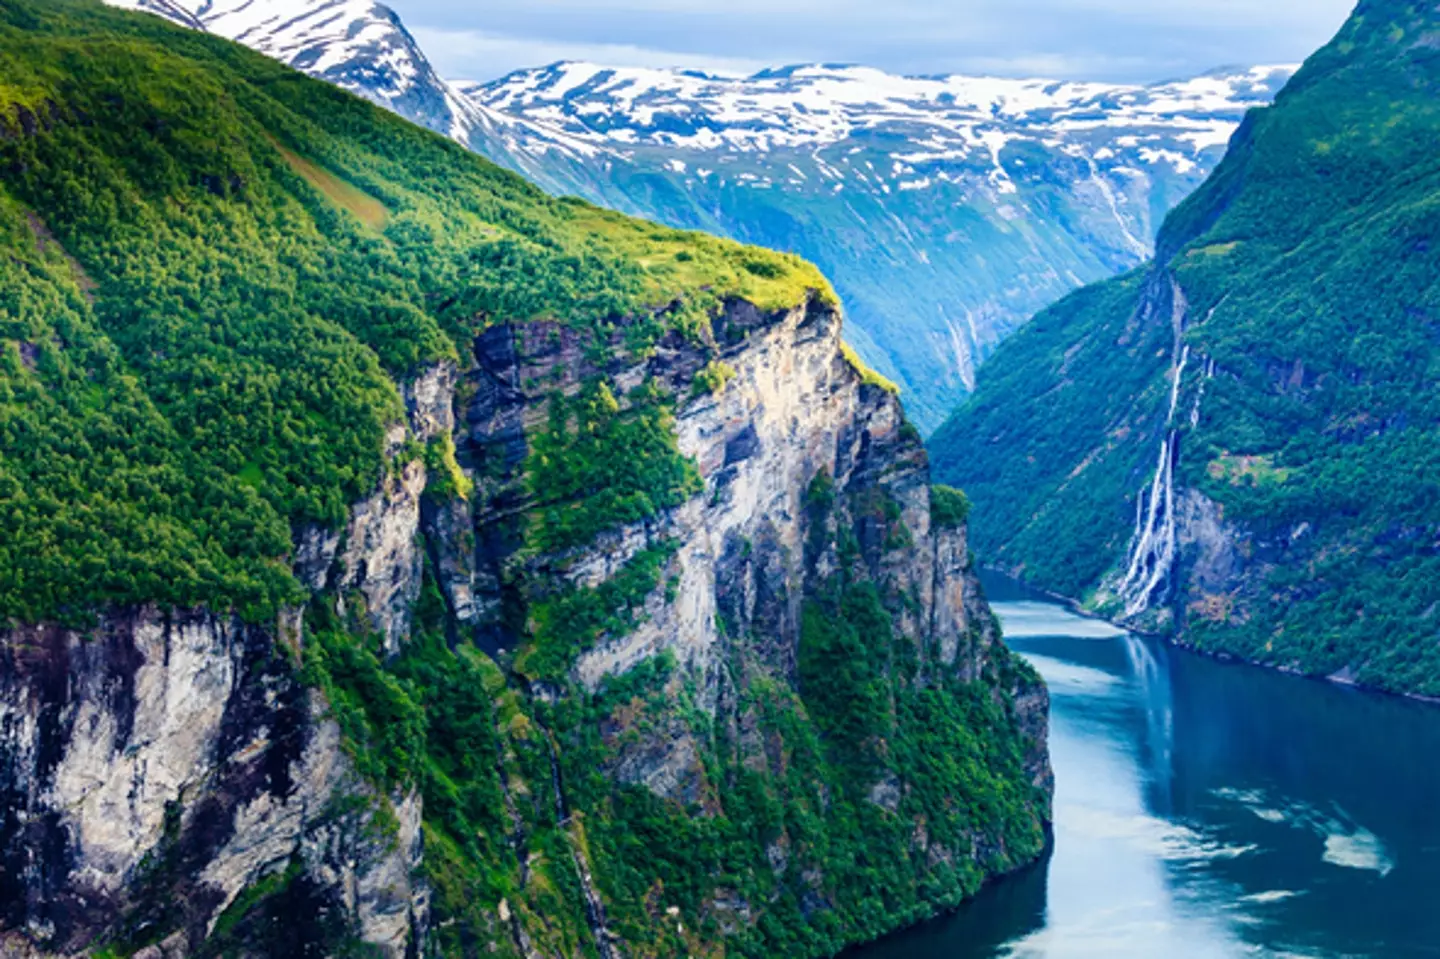 Passengers will explore the Norwegian fjords.